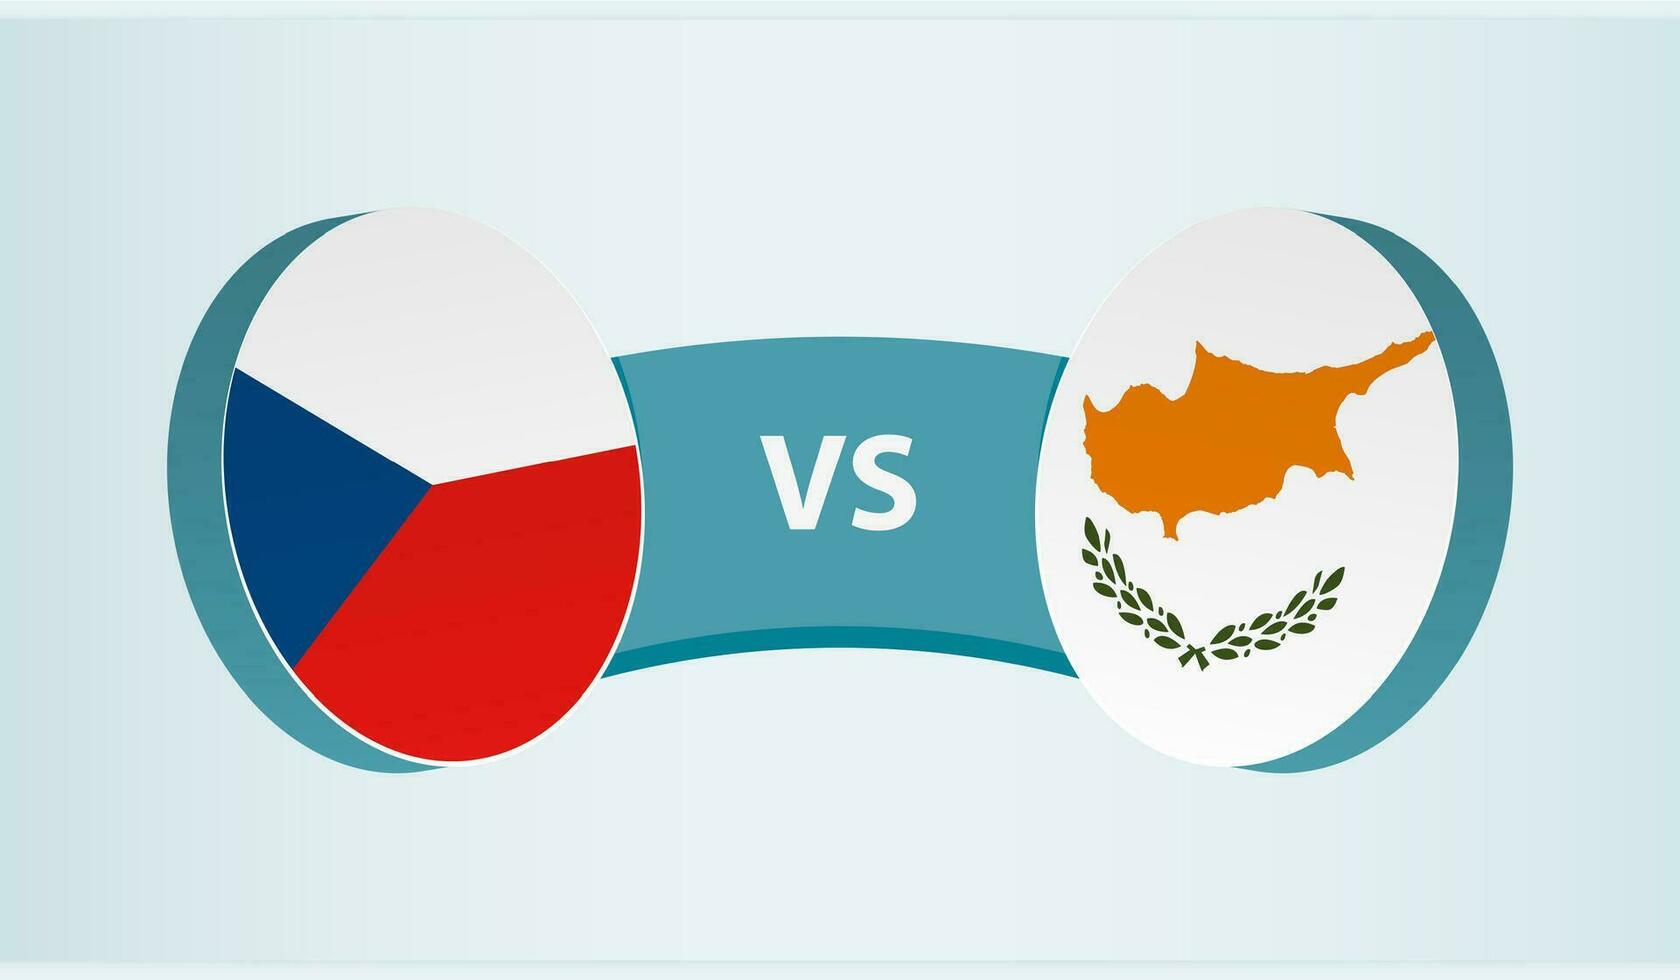 Czech Republic versus Cyprus, team sports competition concept. vector